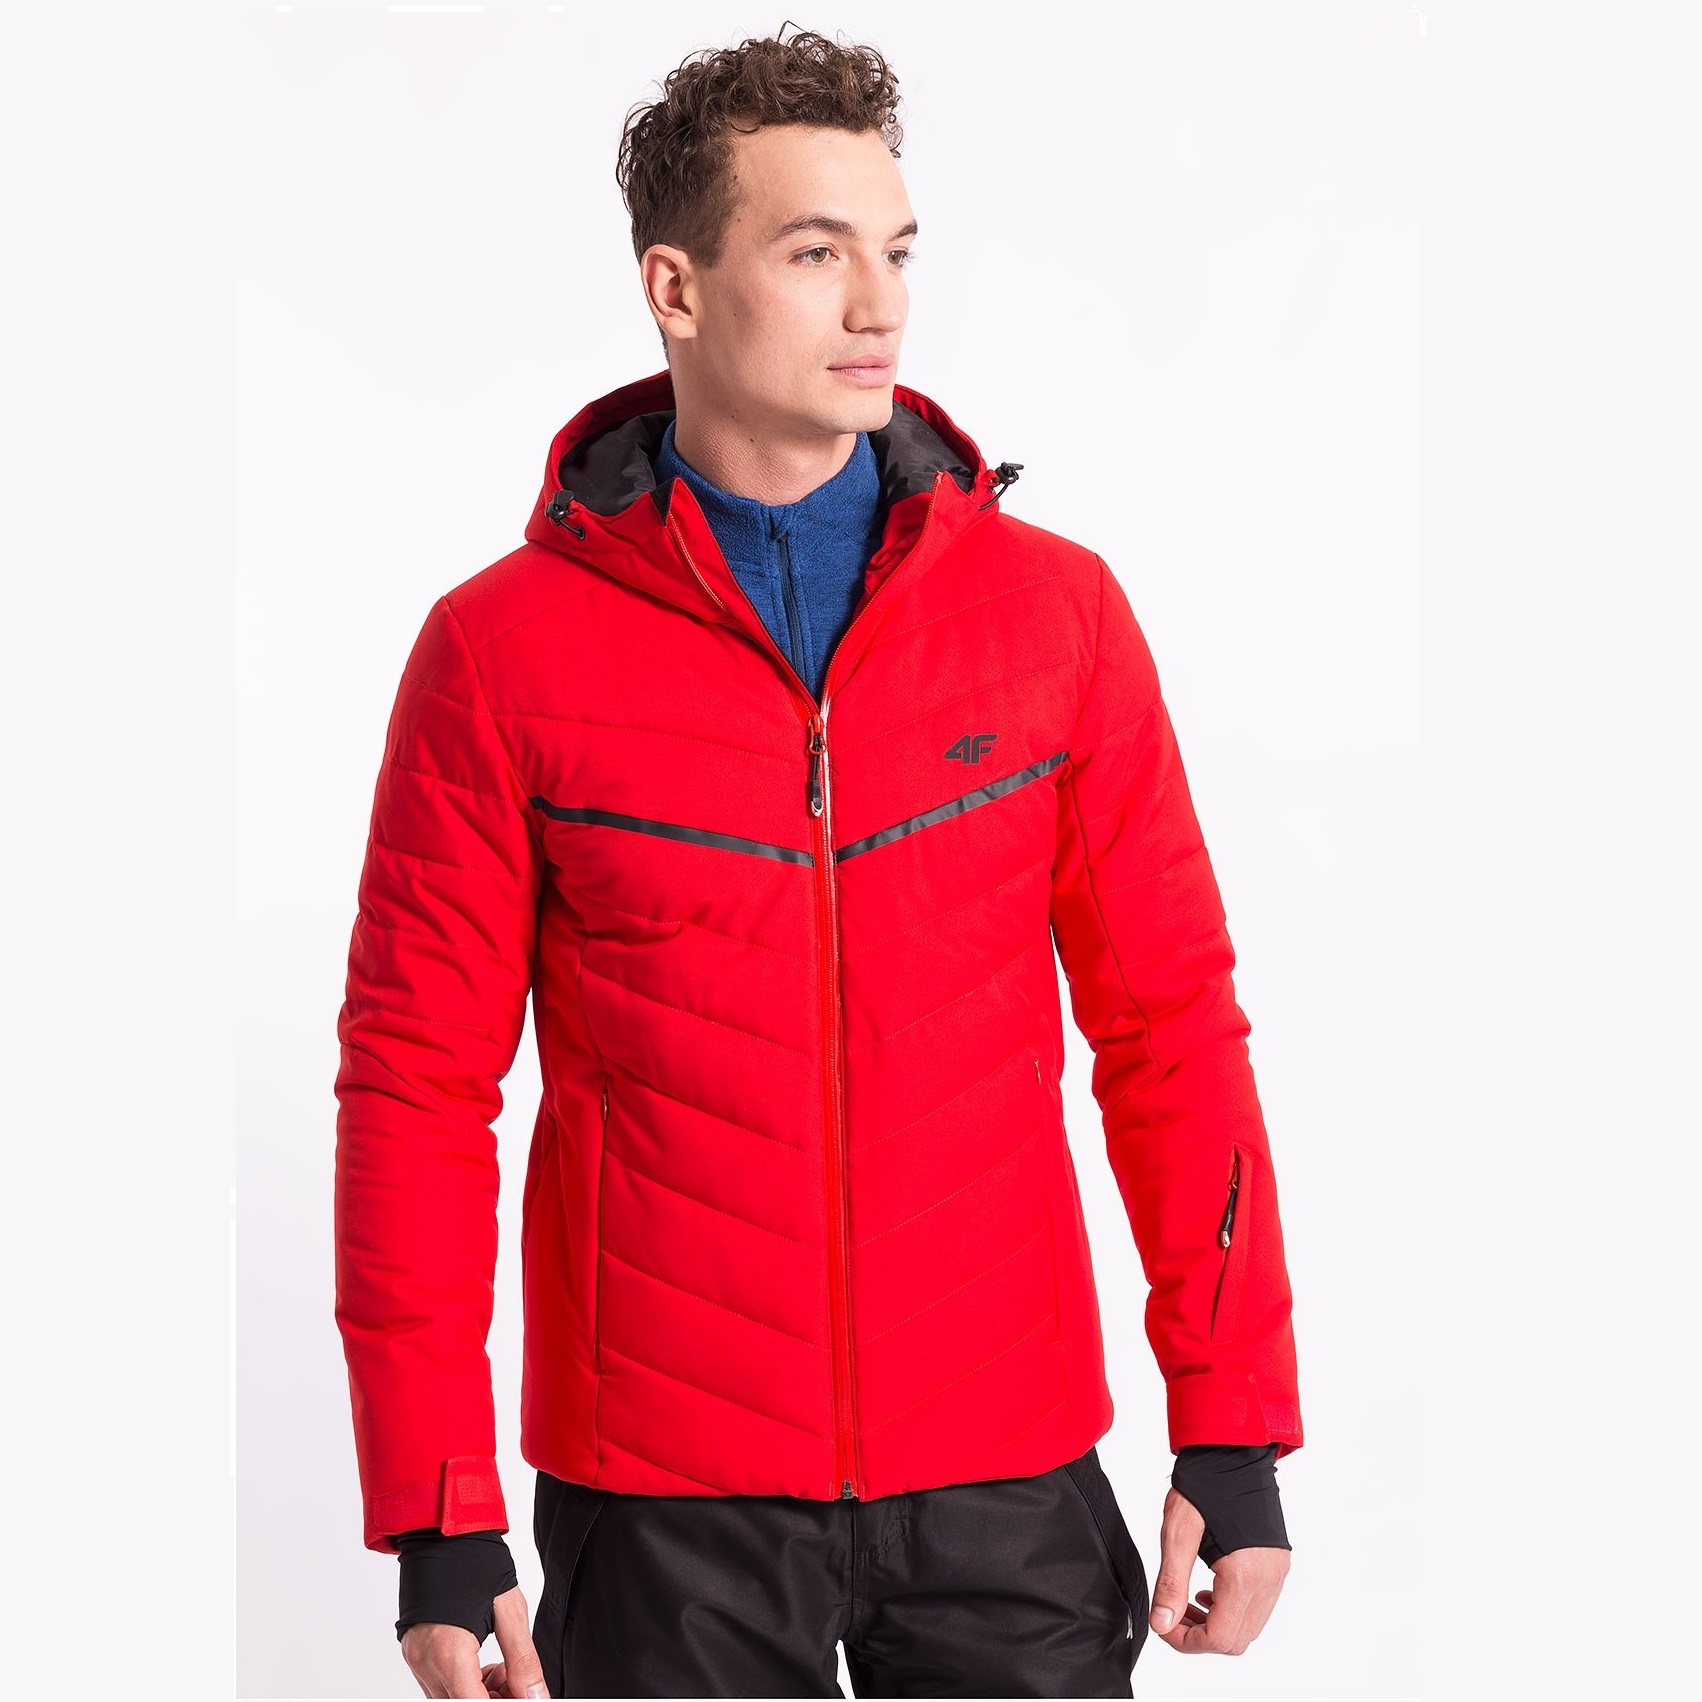 Geci Ski & Snow -  4f ski jacket KUMN152